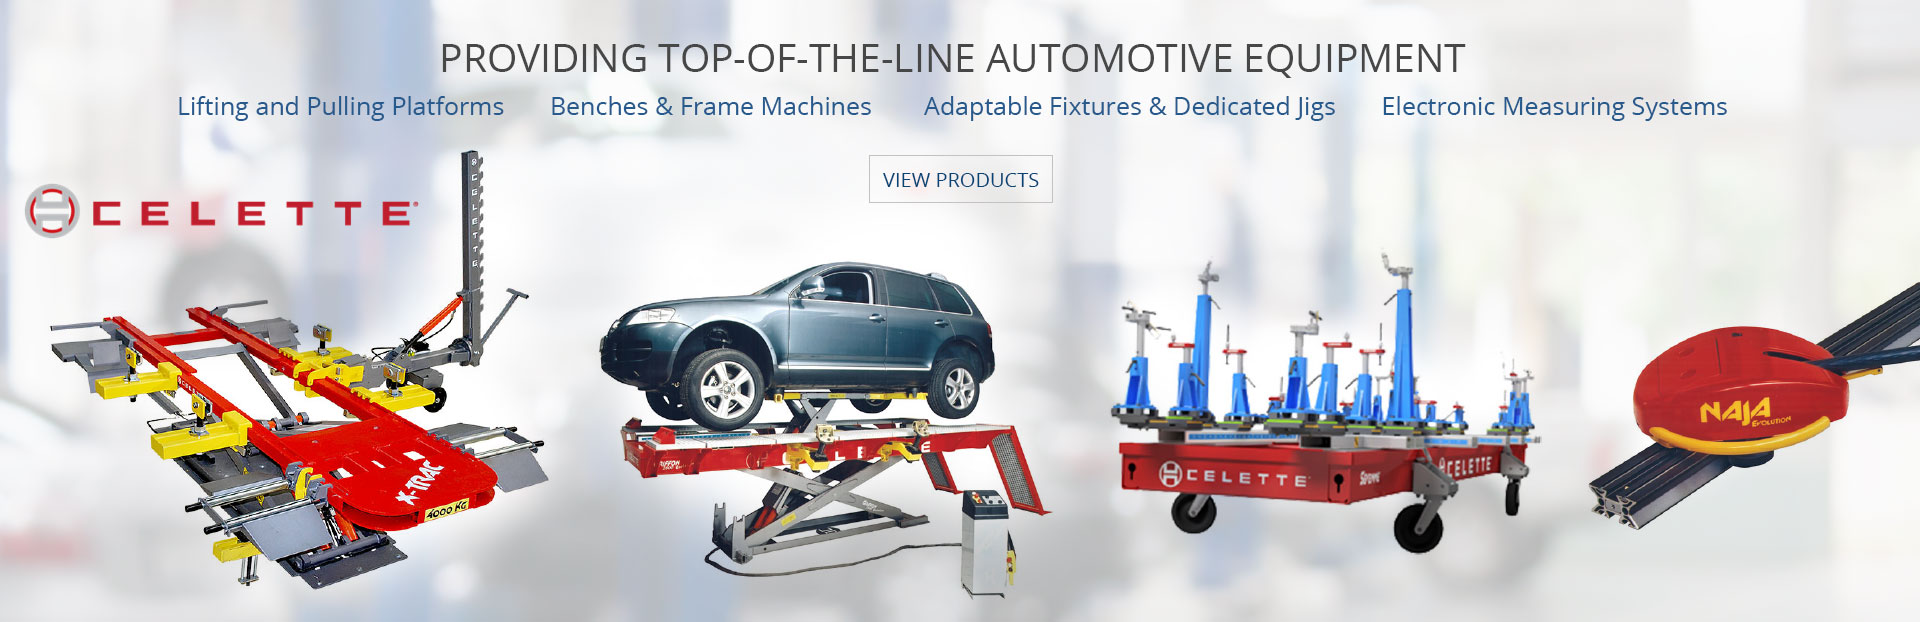 Providing Top of the line automotive equipment